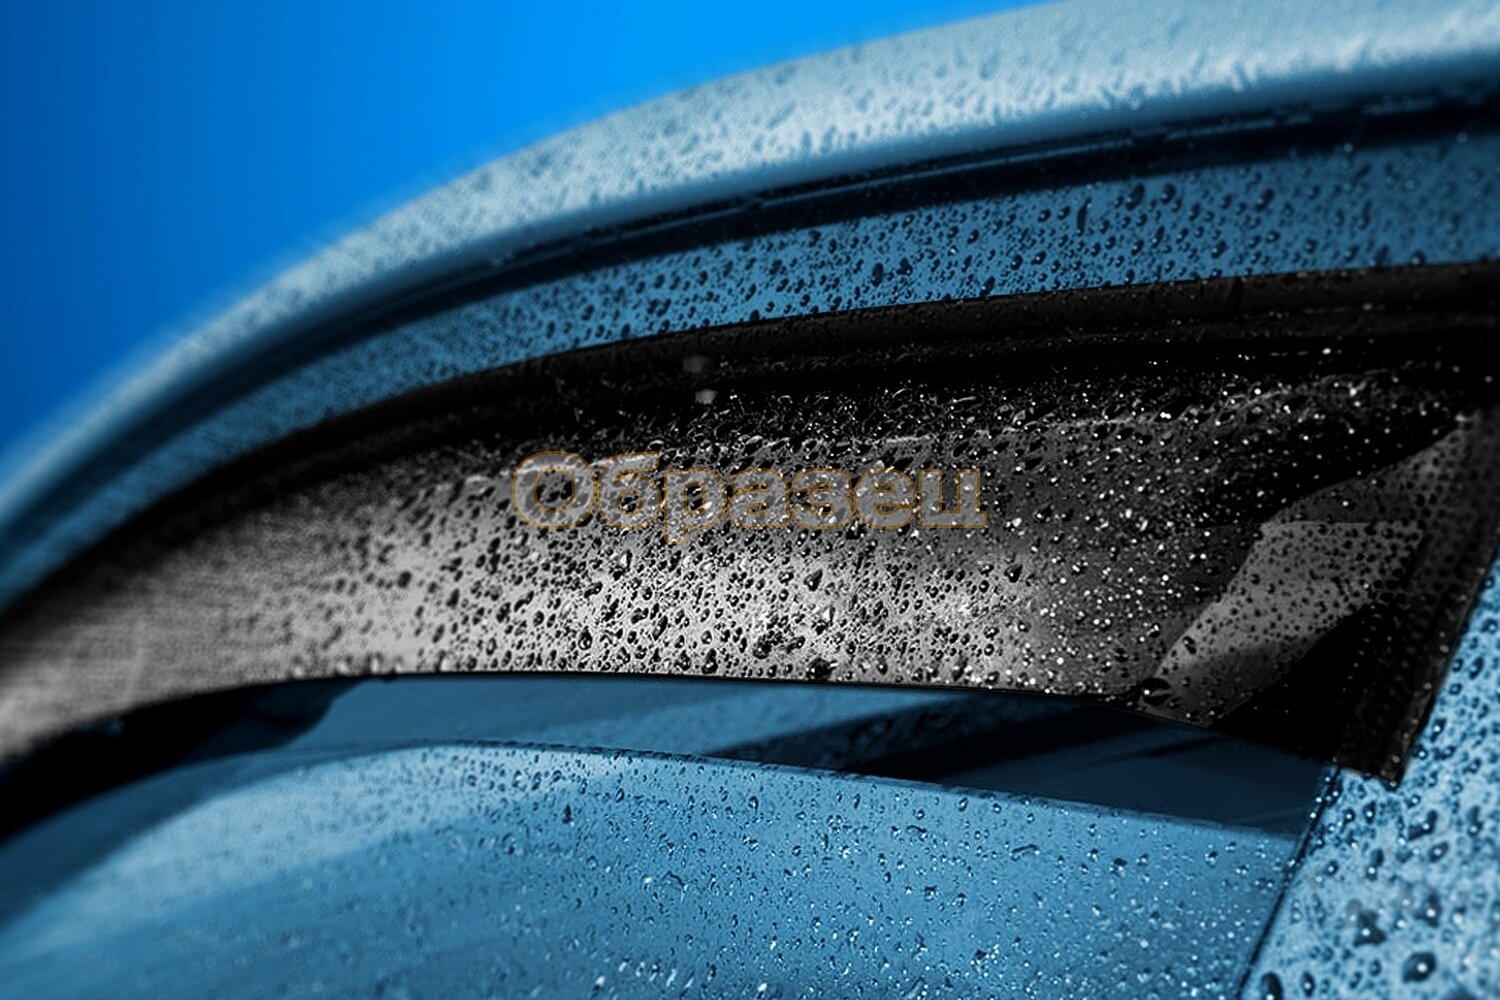 Дефлекторы окон (4 шт.) для Шевроле Авео Т300 2012- год выпуска (Chevrolet Aveo T300) REIN REINWV252